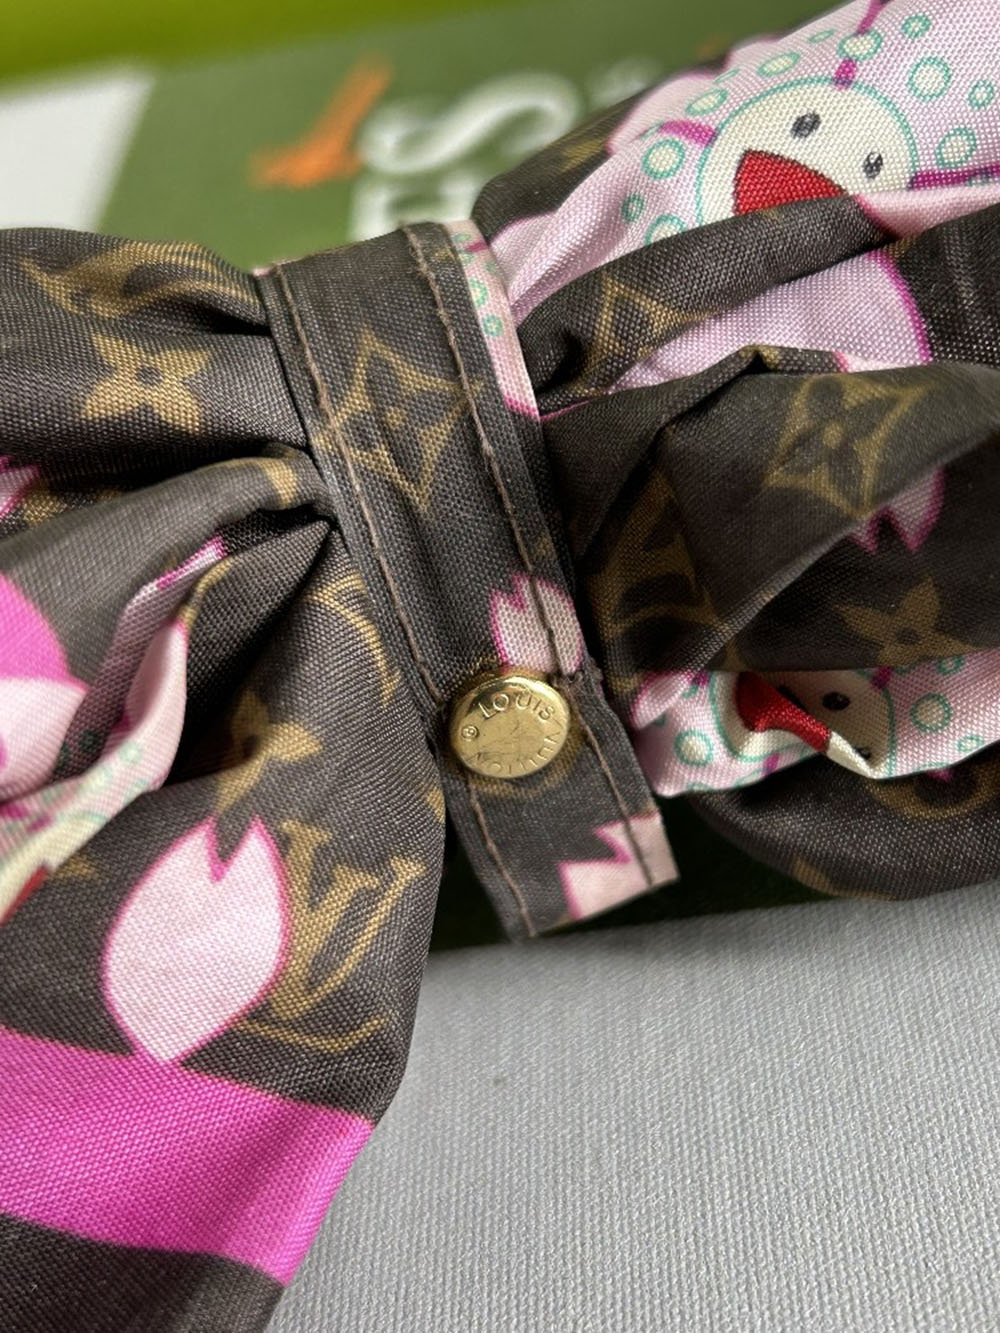 Louis Vuitton Paris Cherry Blossom Monogram Limited Edition Umbrella - Image 4 of 11